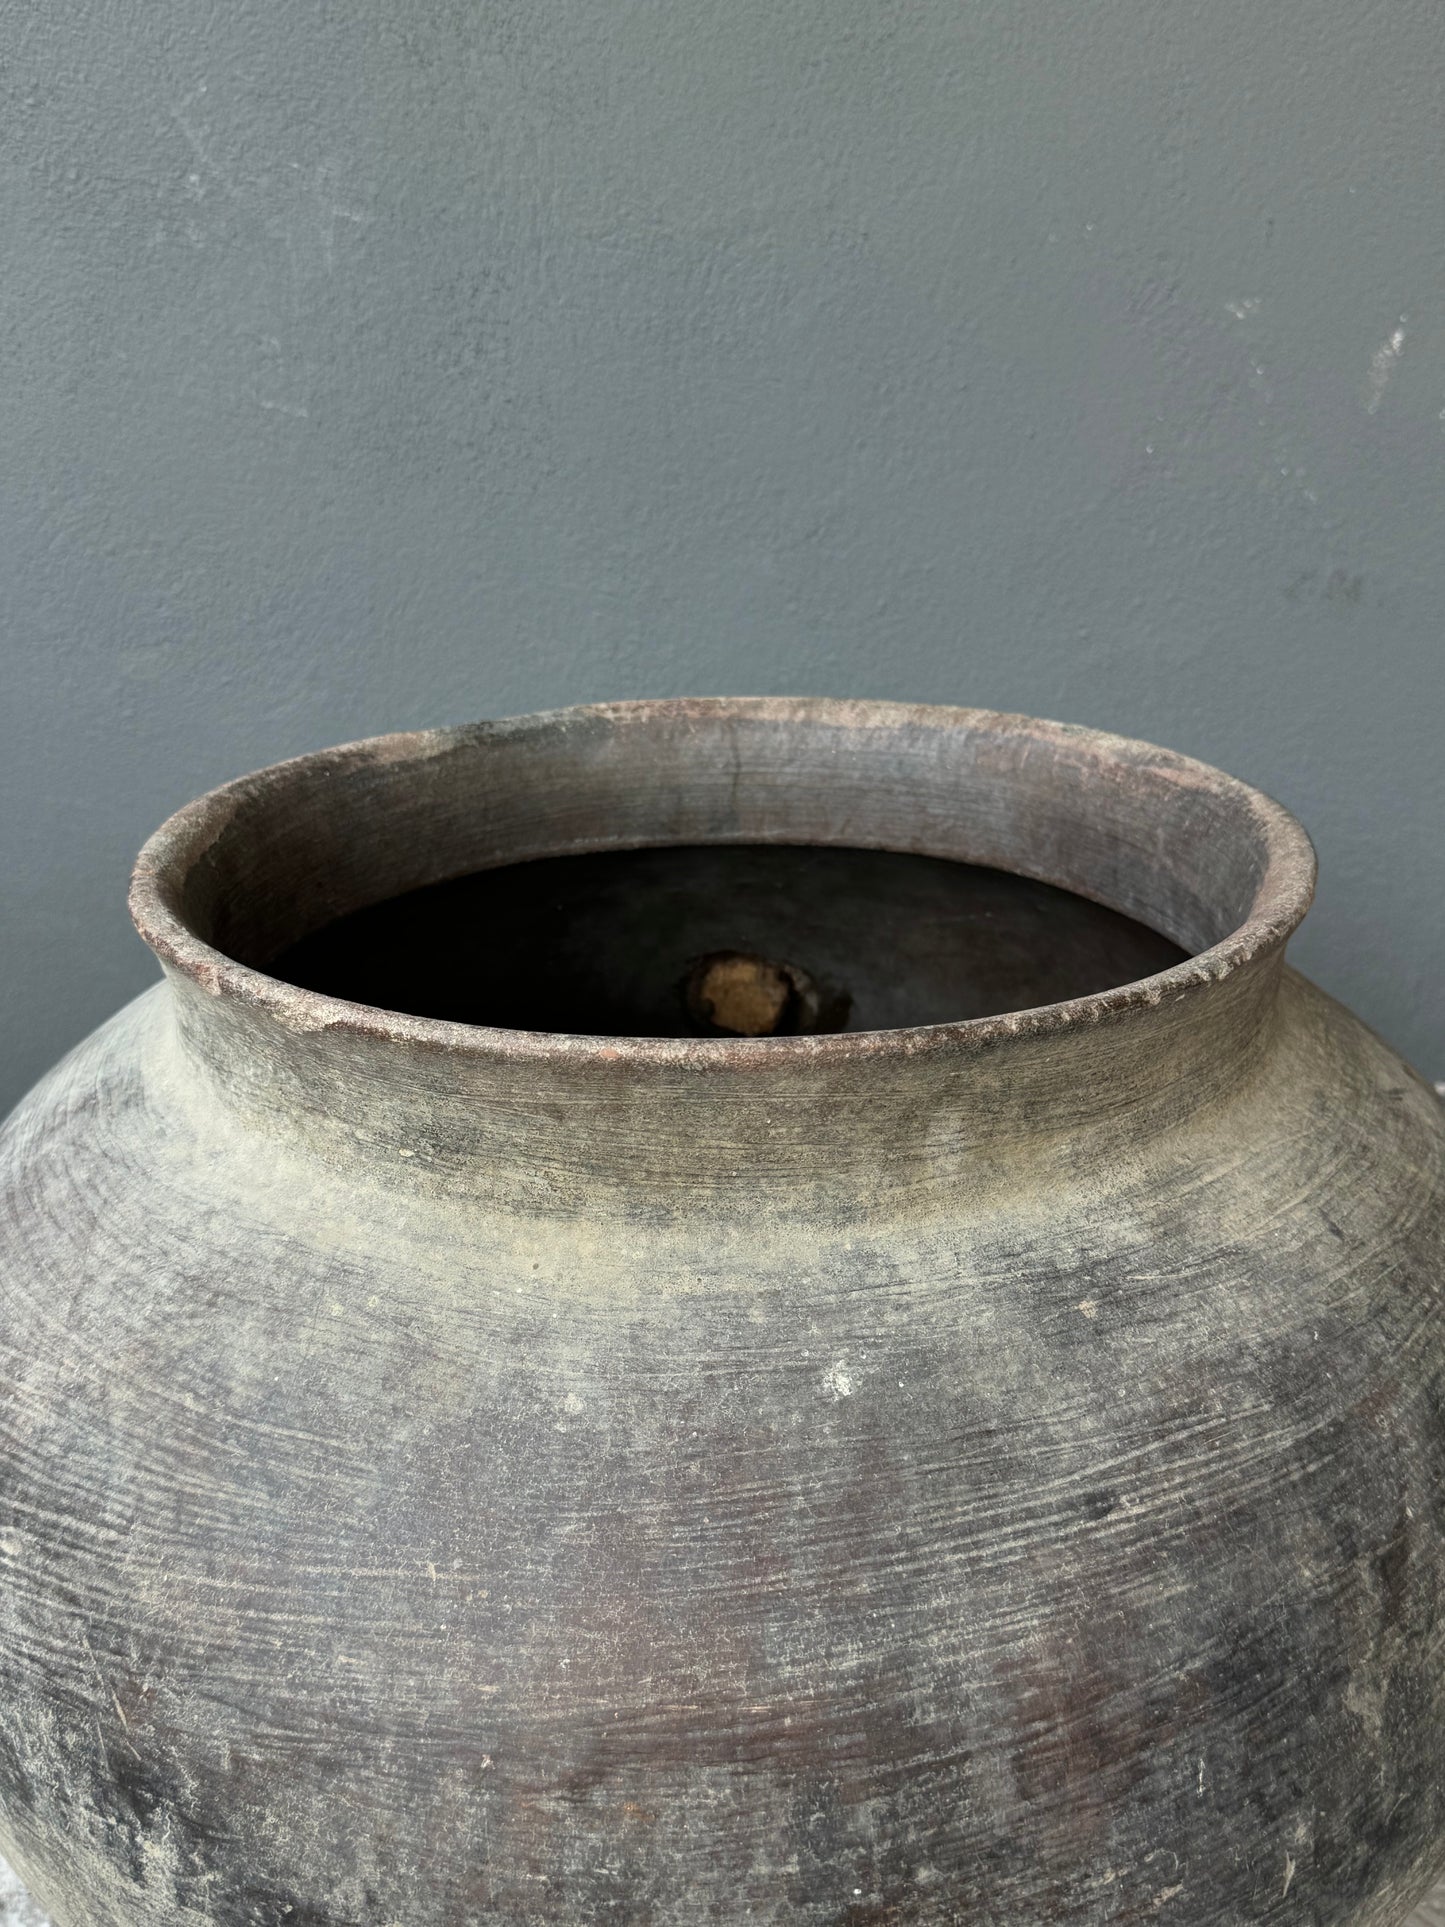 Mixteca Wide Mouth Water Pot From Oaxaca